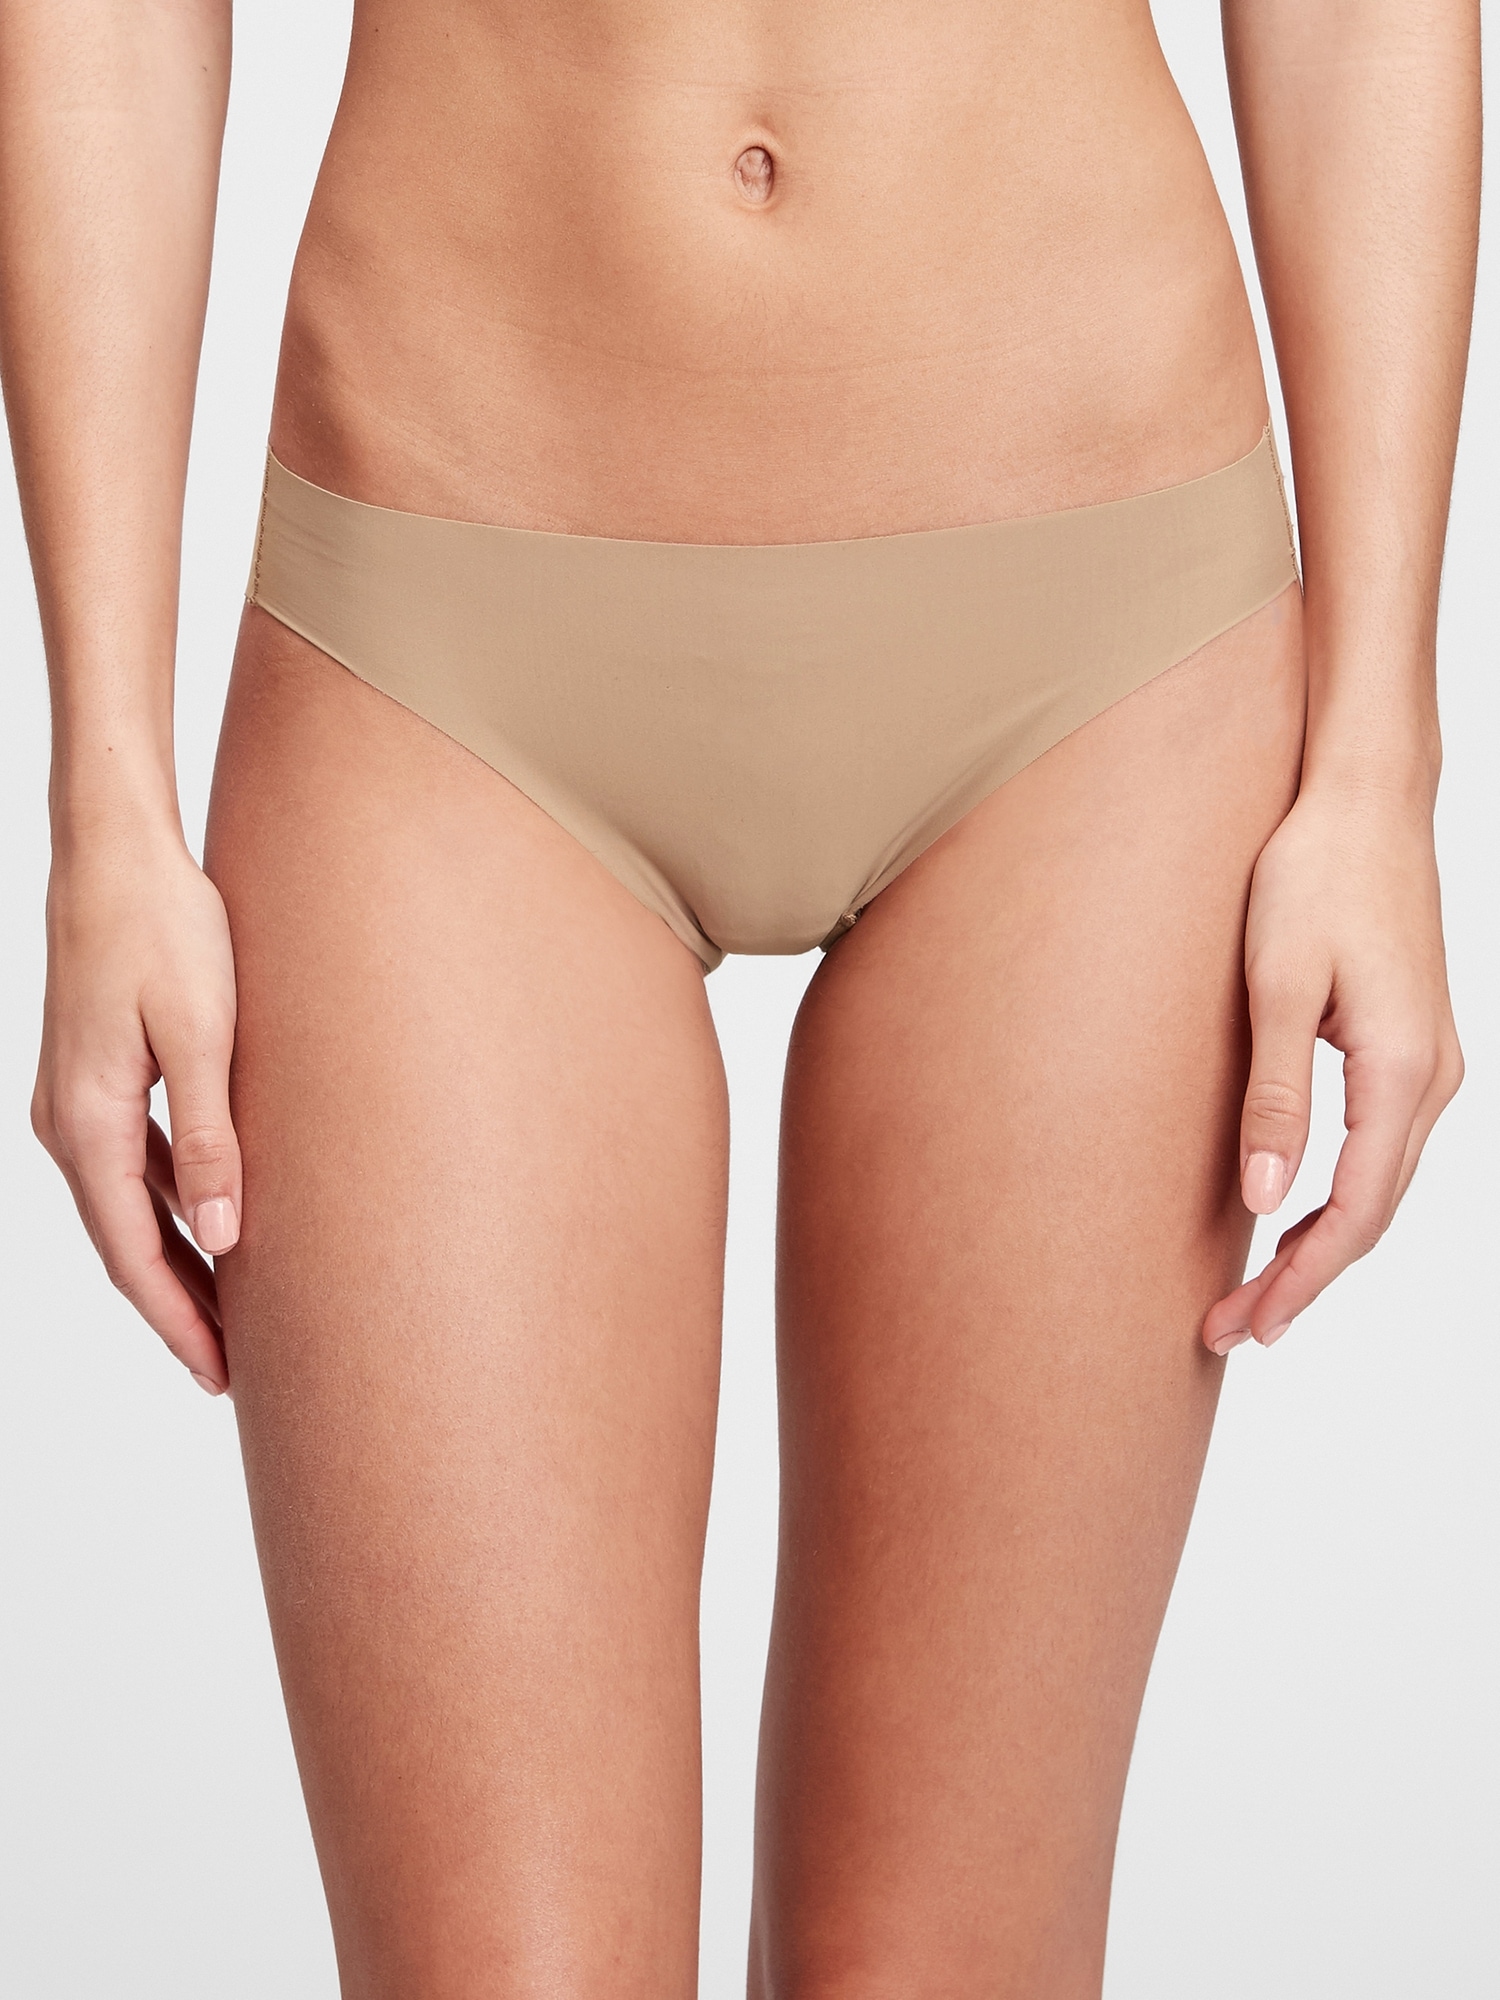 Seamless Panty Cotton No Panty Lines Bikini Brief Combo (Pack of 4)